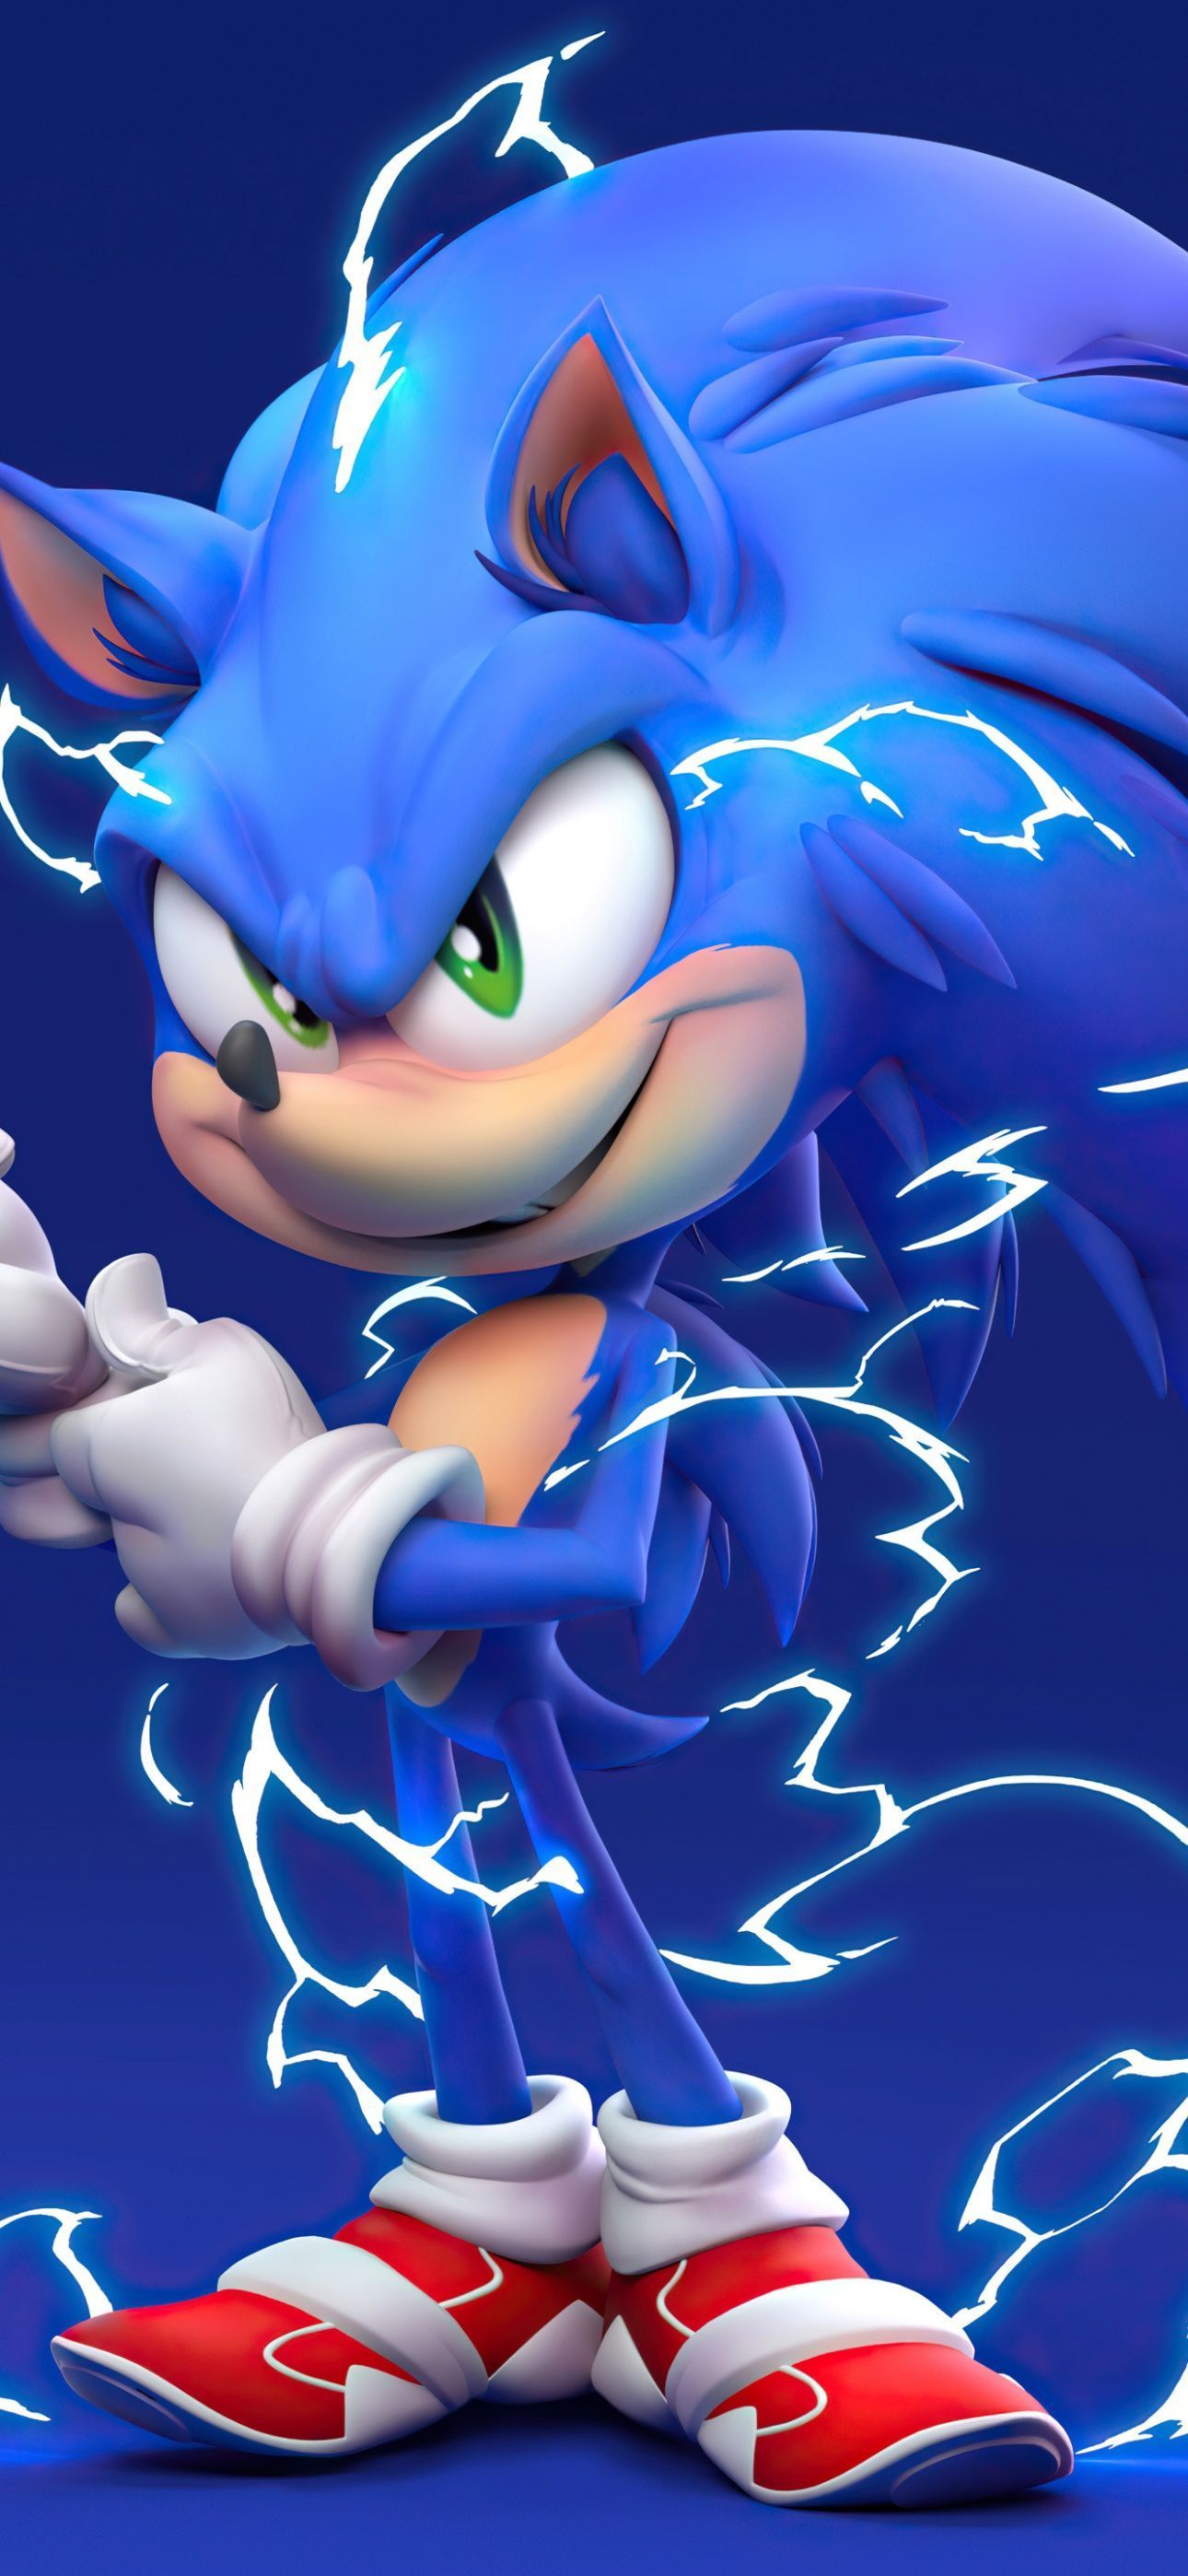 Sonic the Hedgehog iPhone 11 wallpaper - Sonic